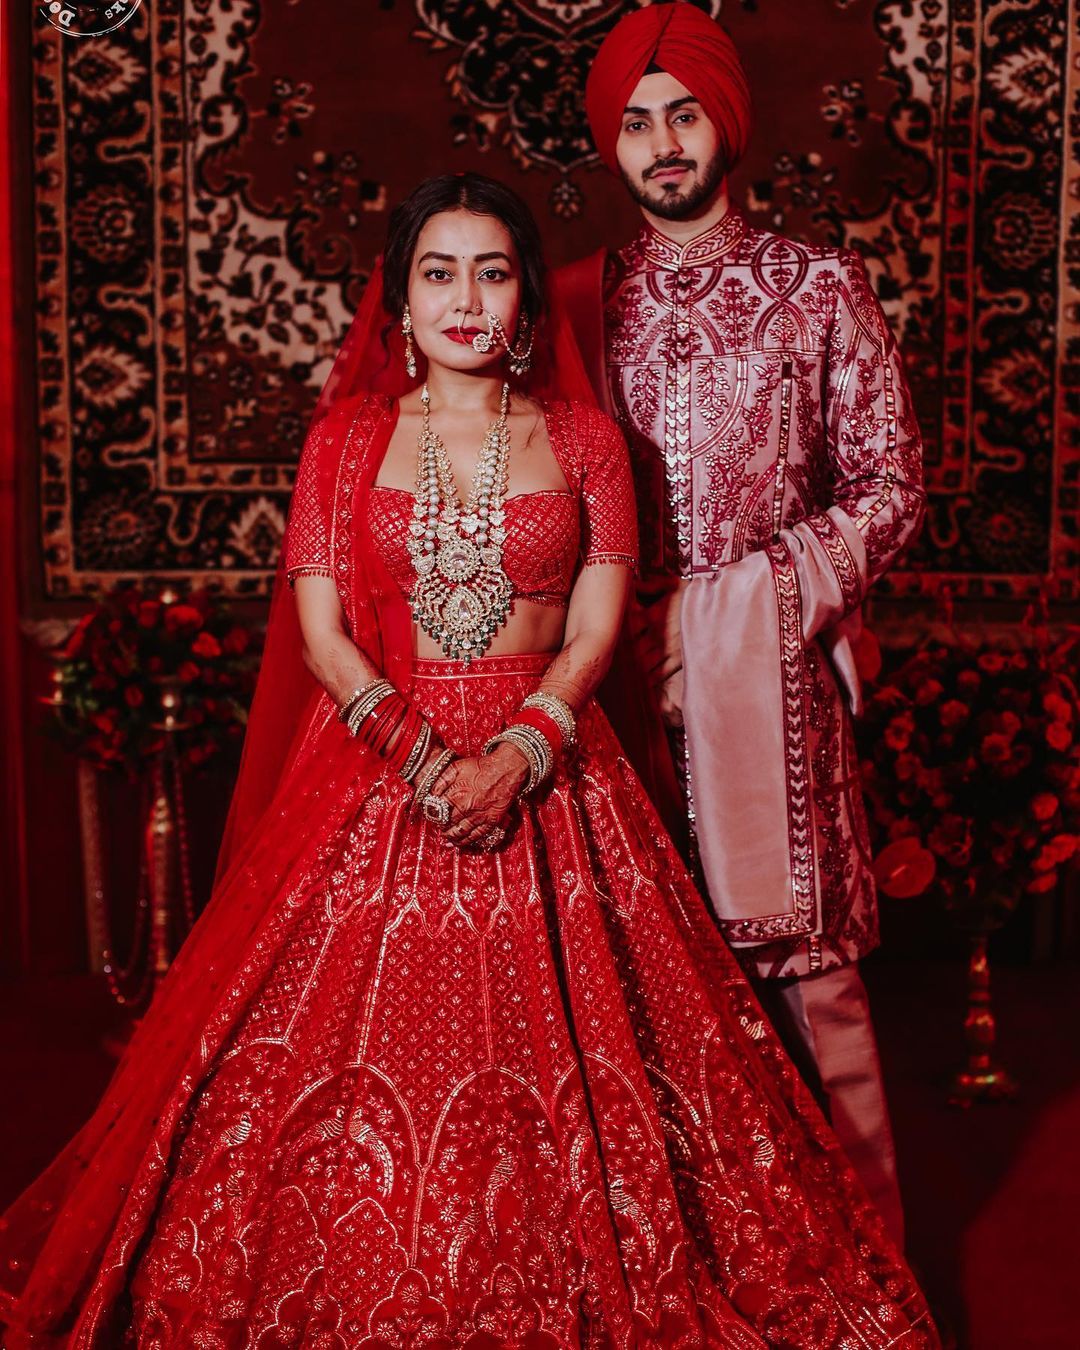 Singer Neha Kakar and Rohanpreet Singh as the Couple gets married at a Gurudwara in Delhi.